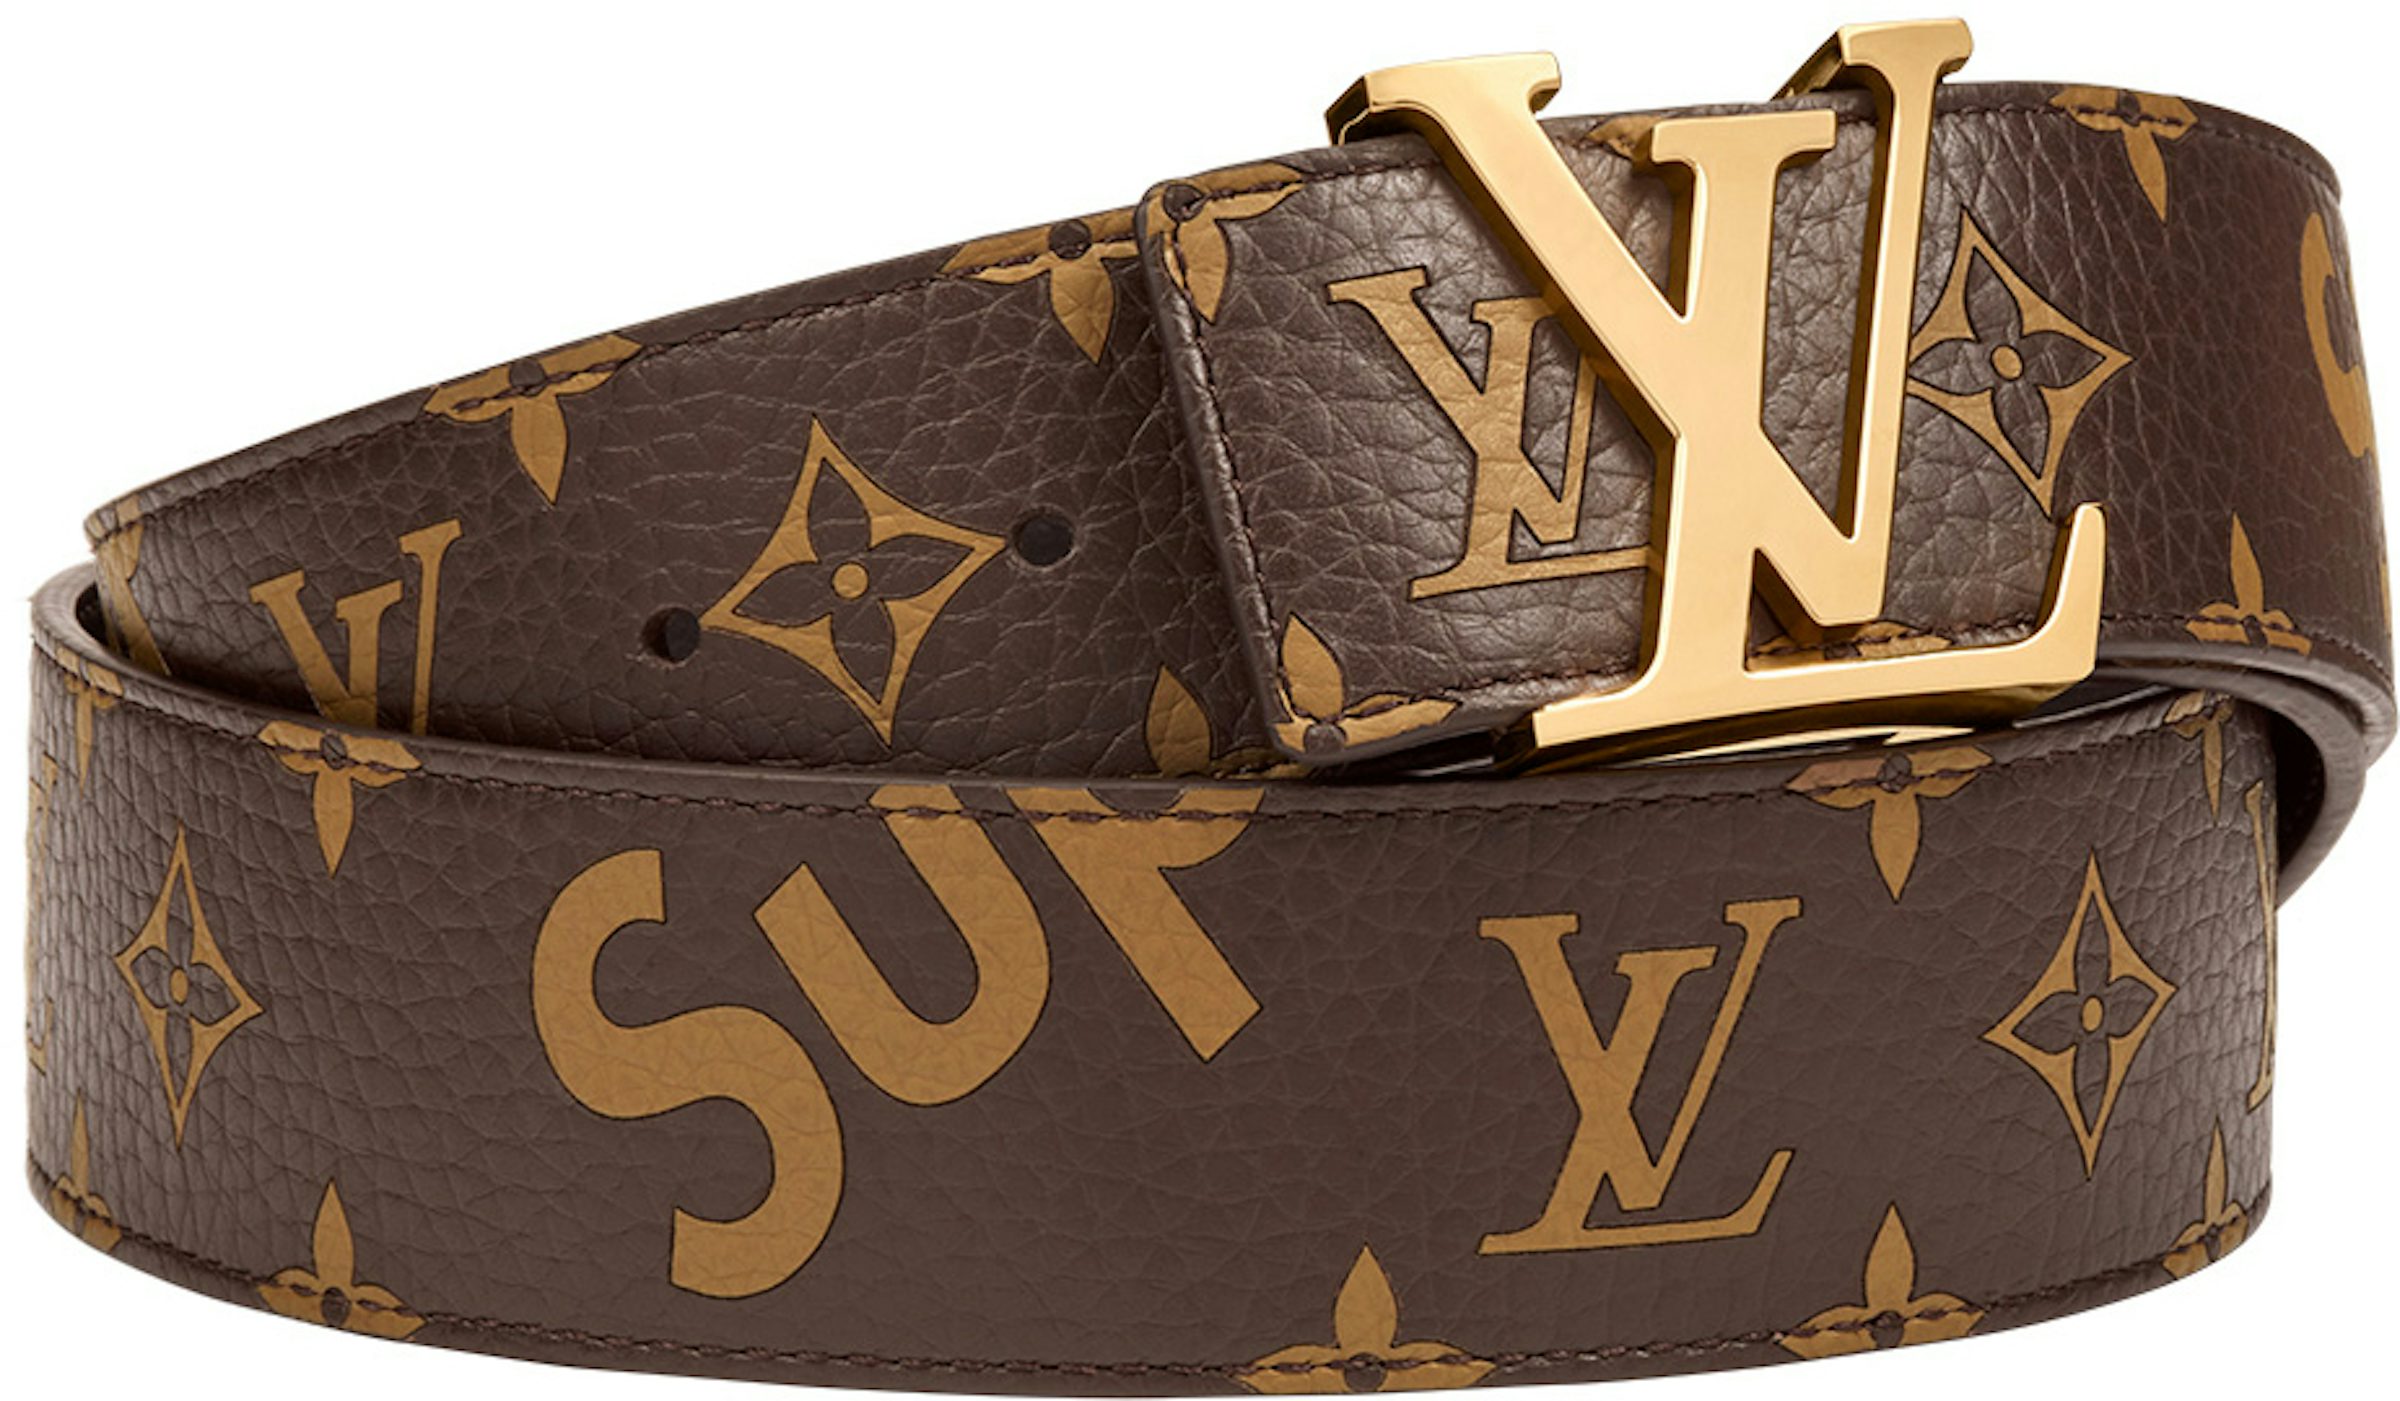 StockX verifies the $70,000 Supreme x Louis Vuitton Malle Courrier